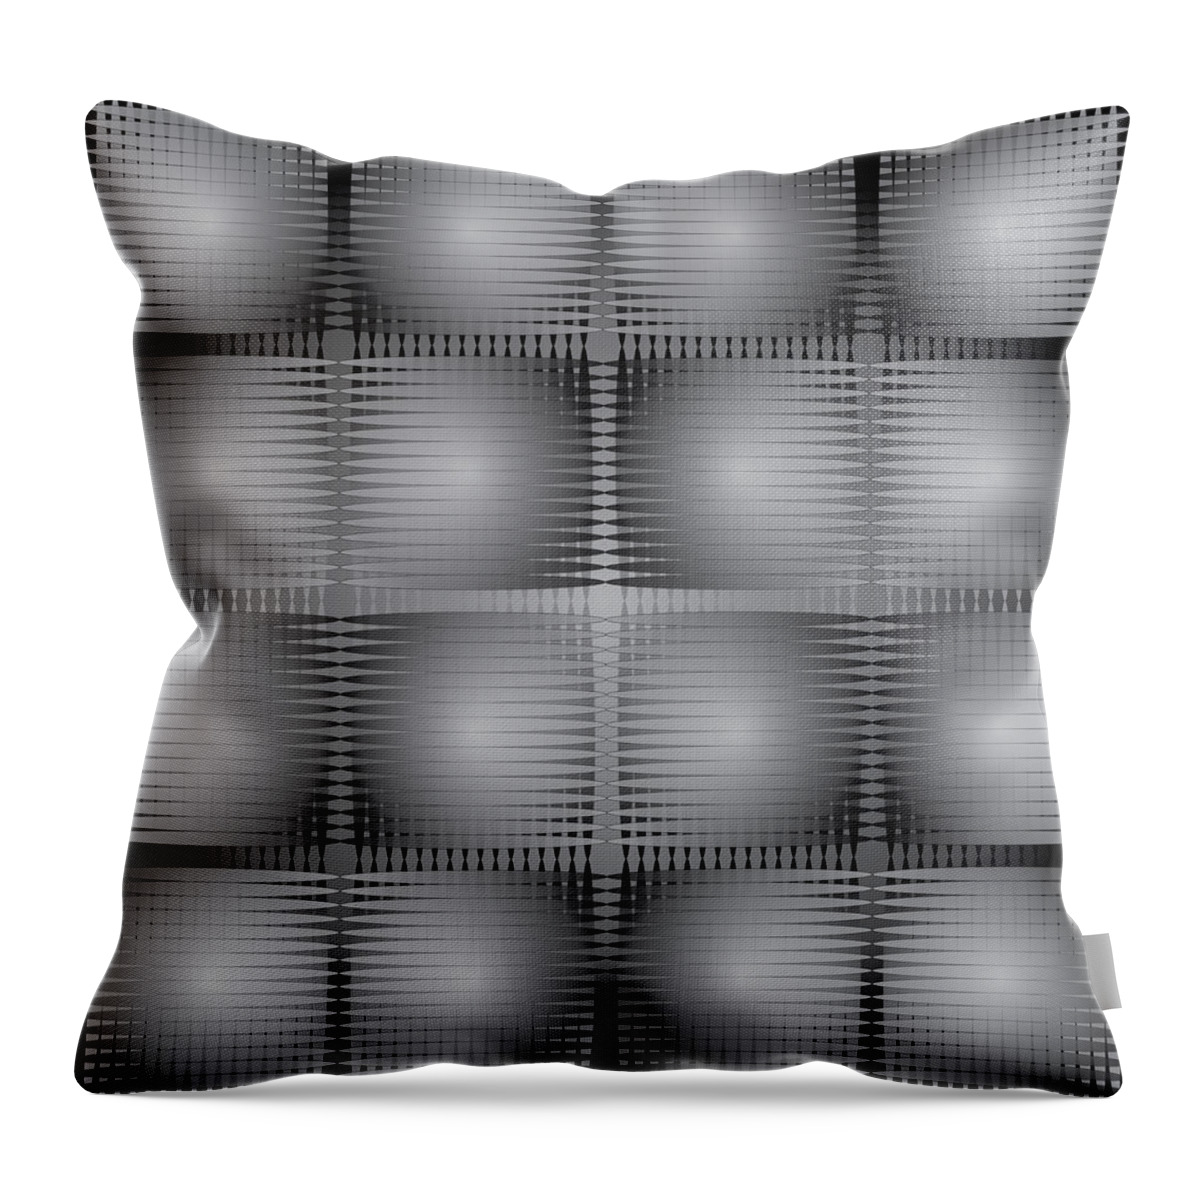 Op Art Throw Pillow featuring the digital art Scoopbox Wall by Kevin McLaughlin